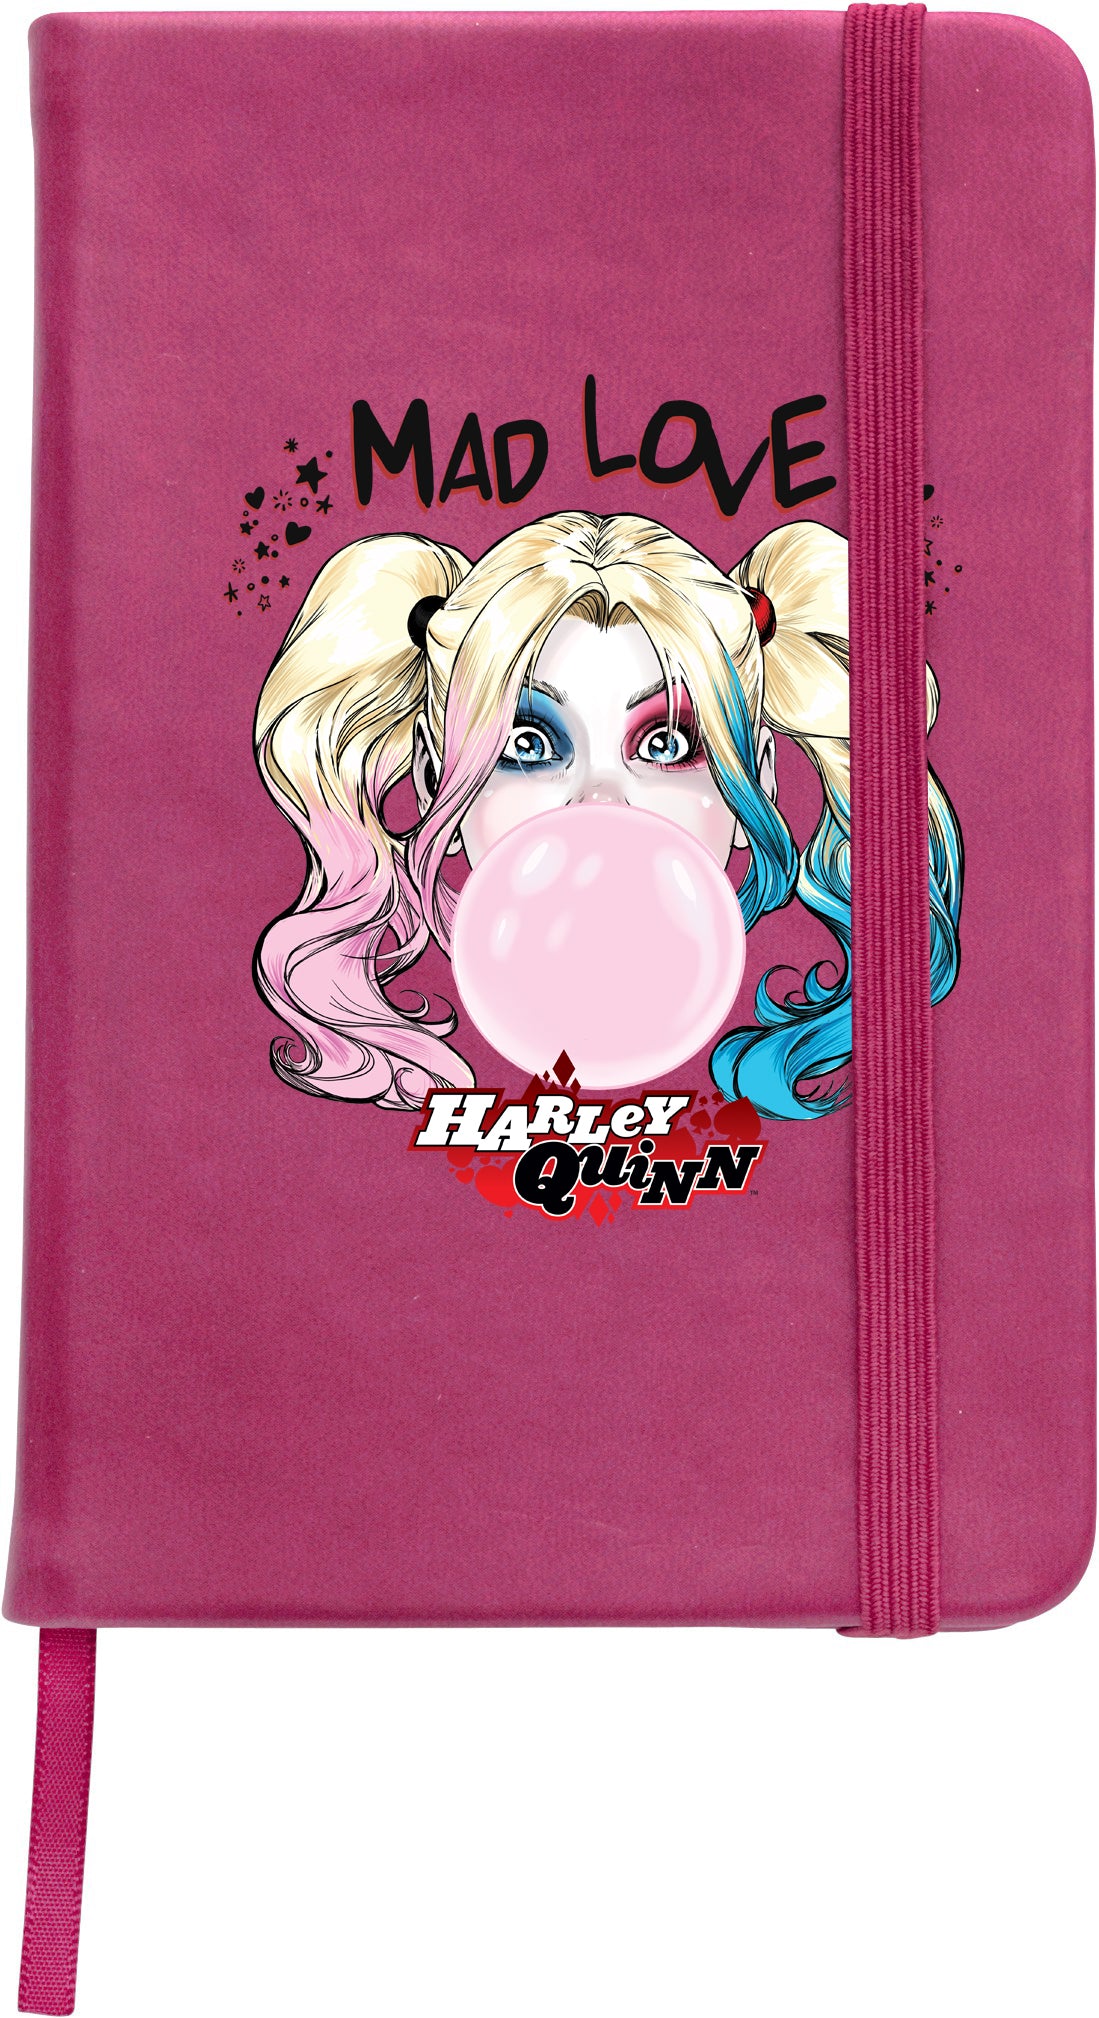 Dc Comics - Harley Quinn - Mad Love Rózsaszín Füzet